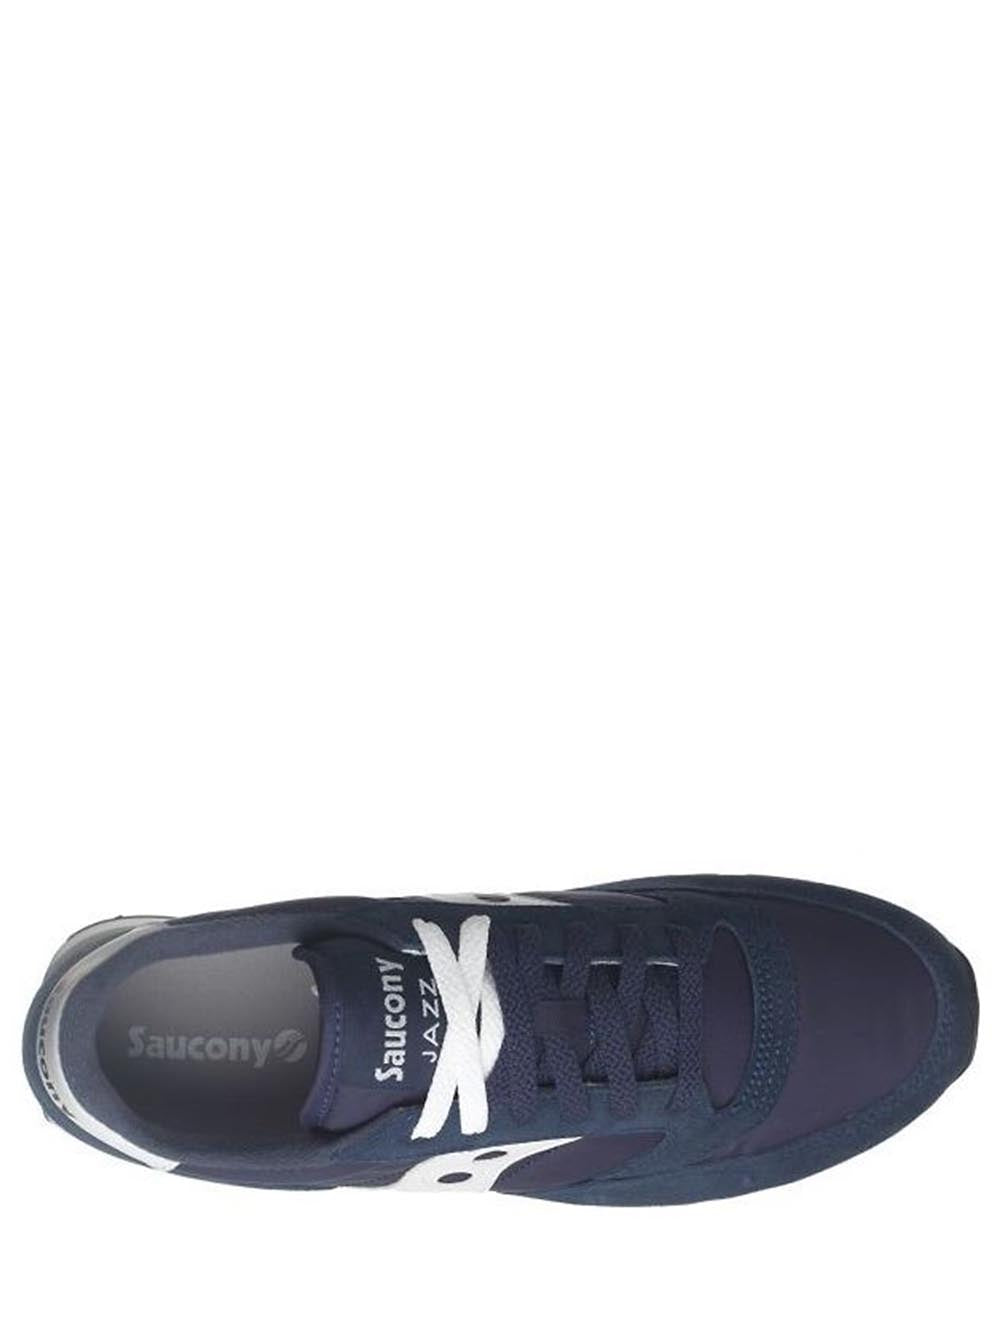 SAUCONY Sneakers Unisex Blu/bianco